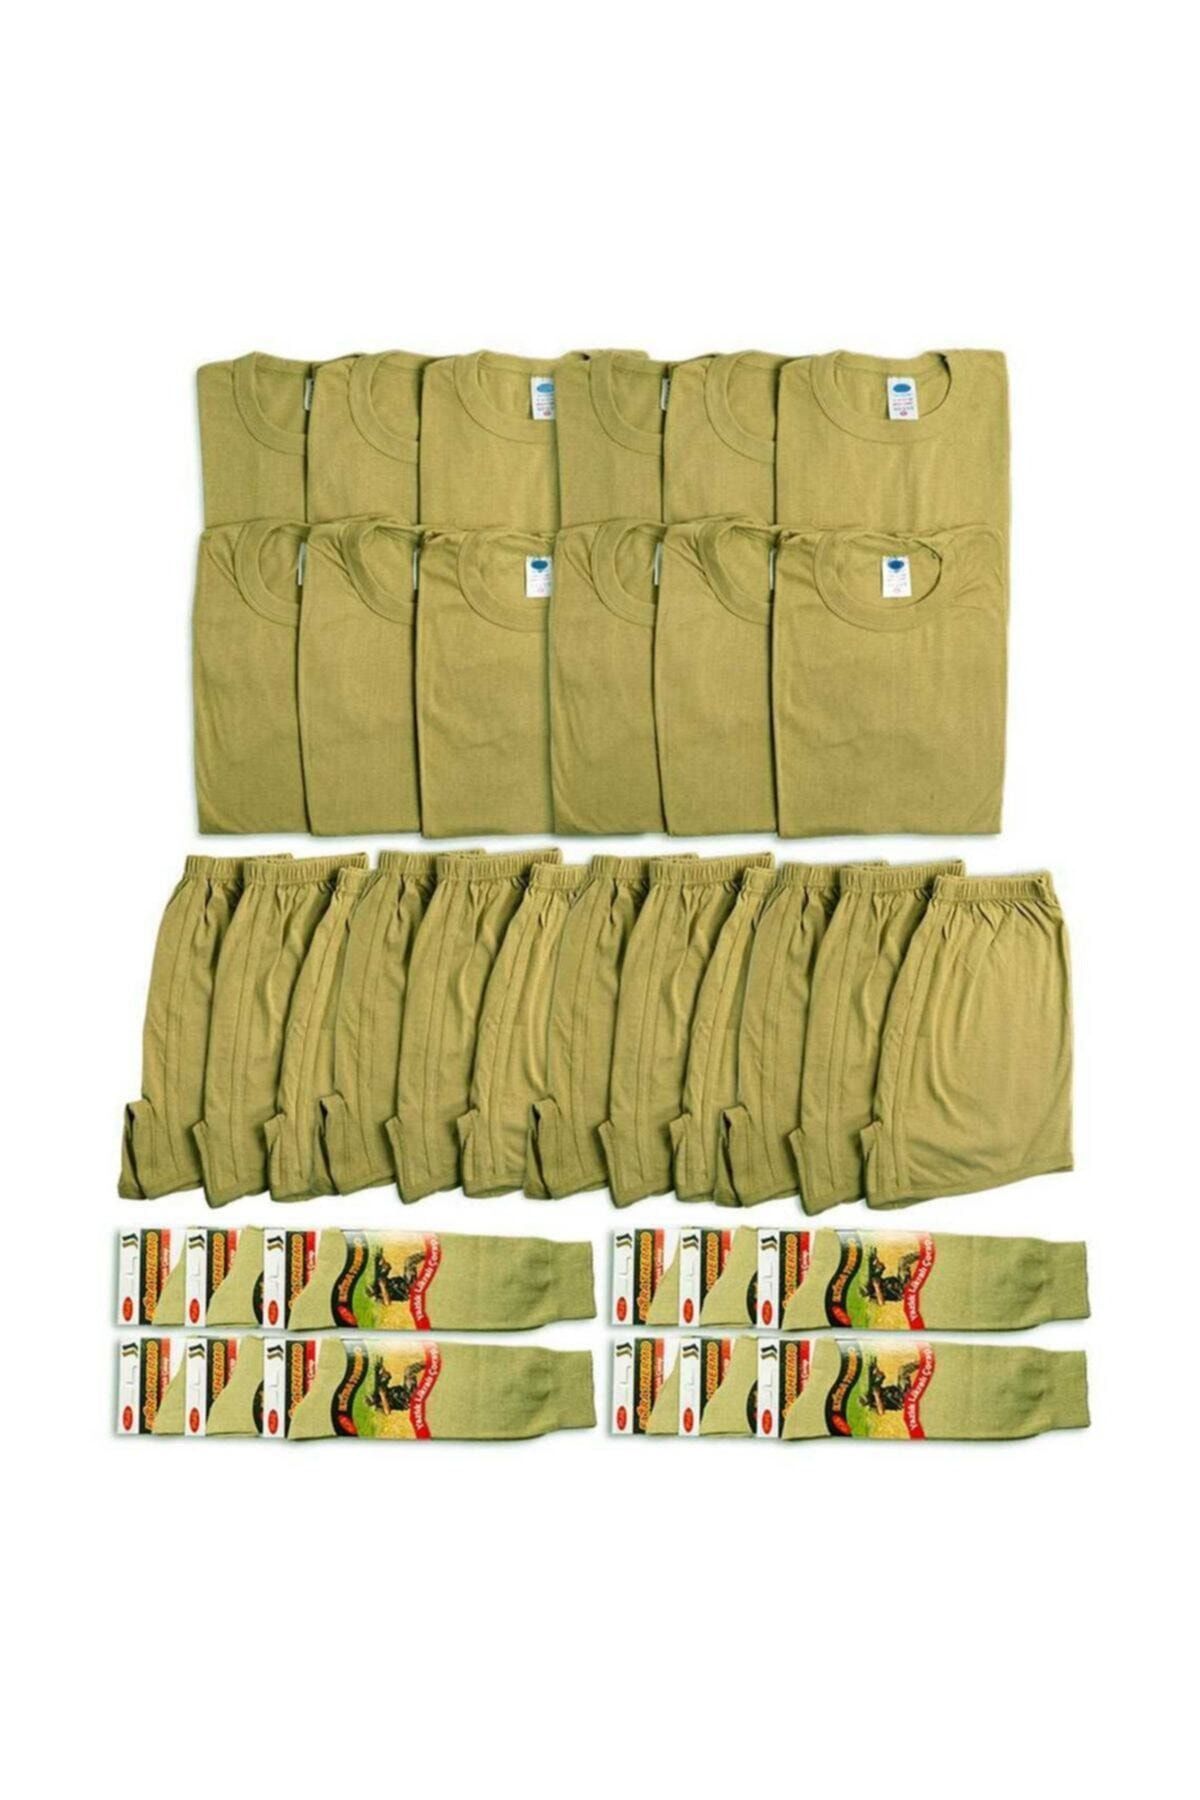 Asker Kolisi 12'li Giyim Seti - Acemi Ve Bedelli Asker Seti - Asker Malzemesi